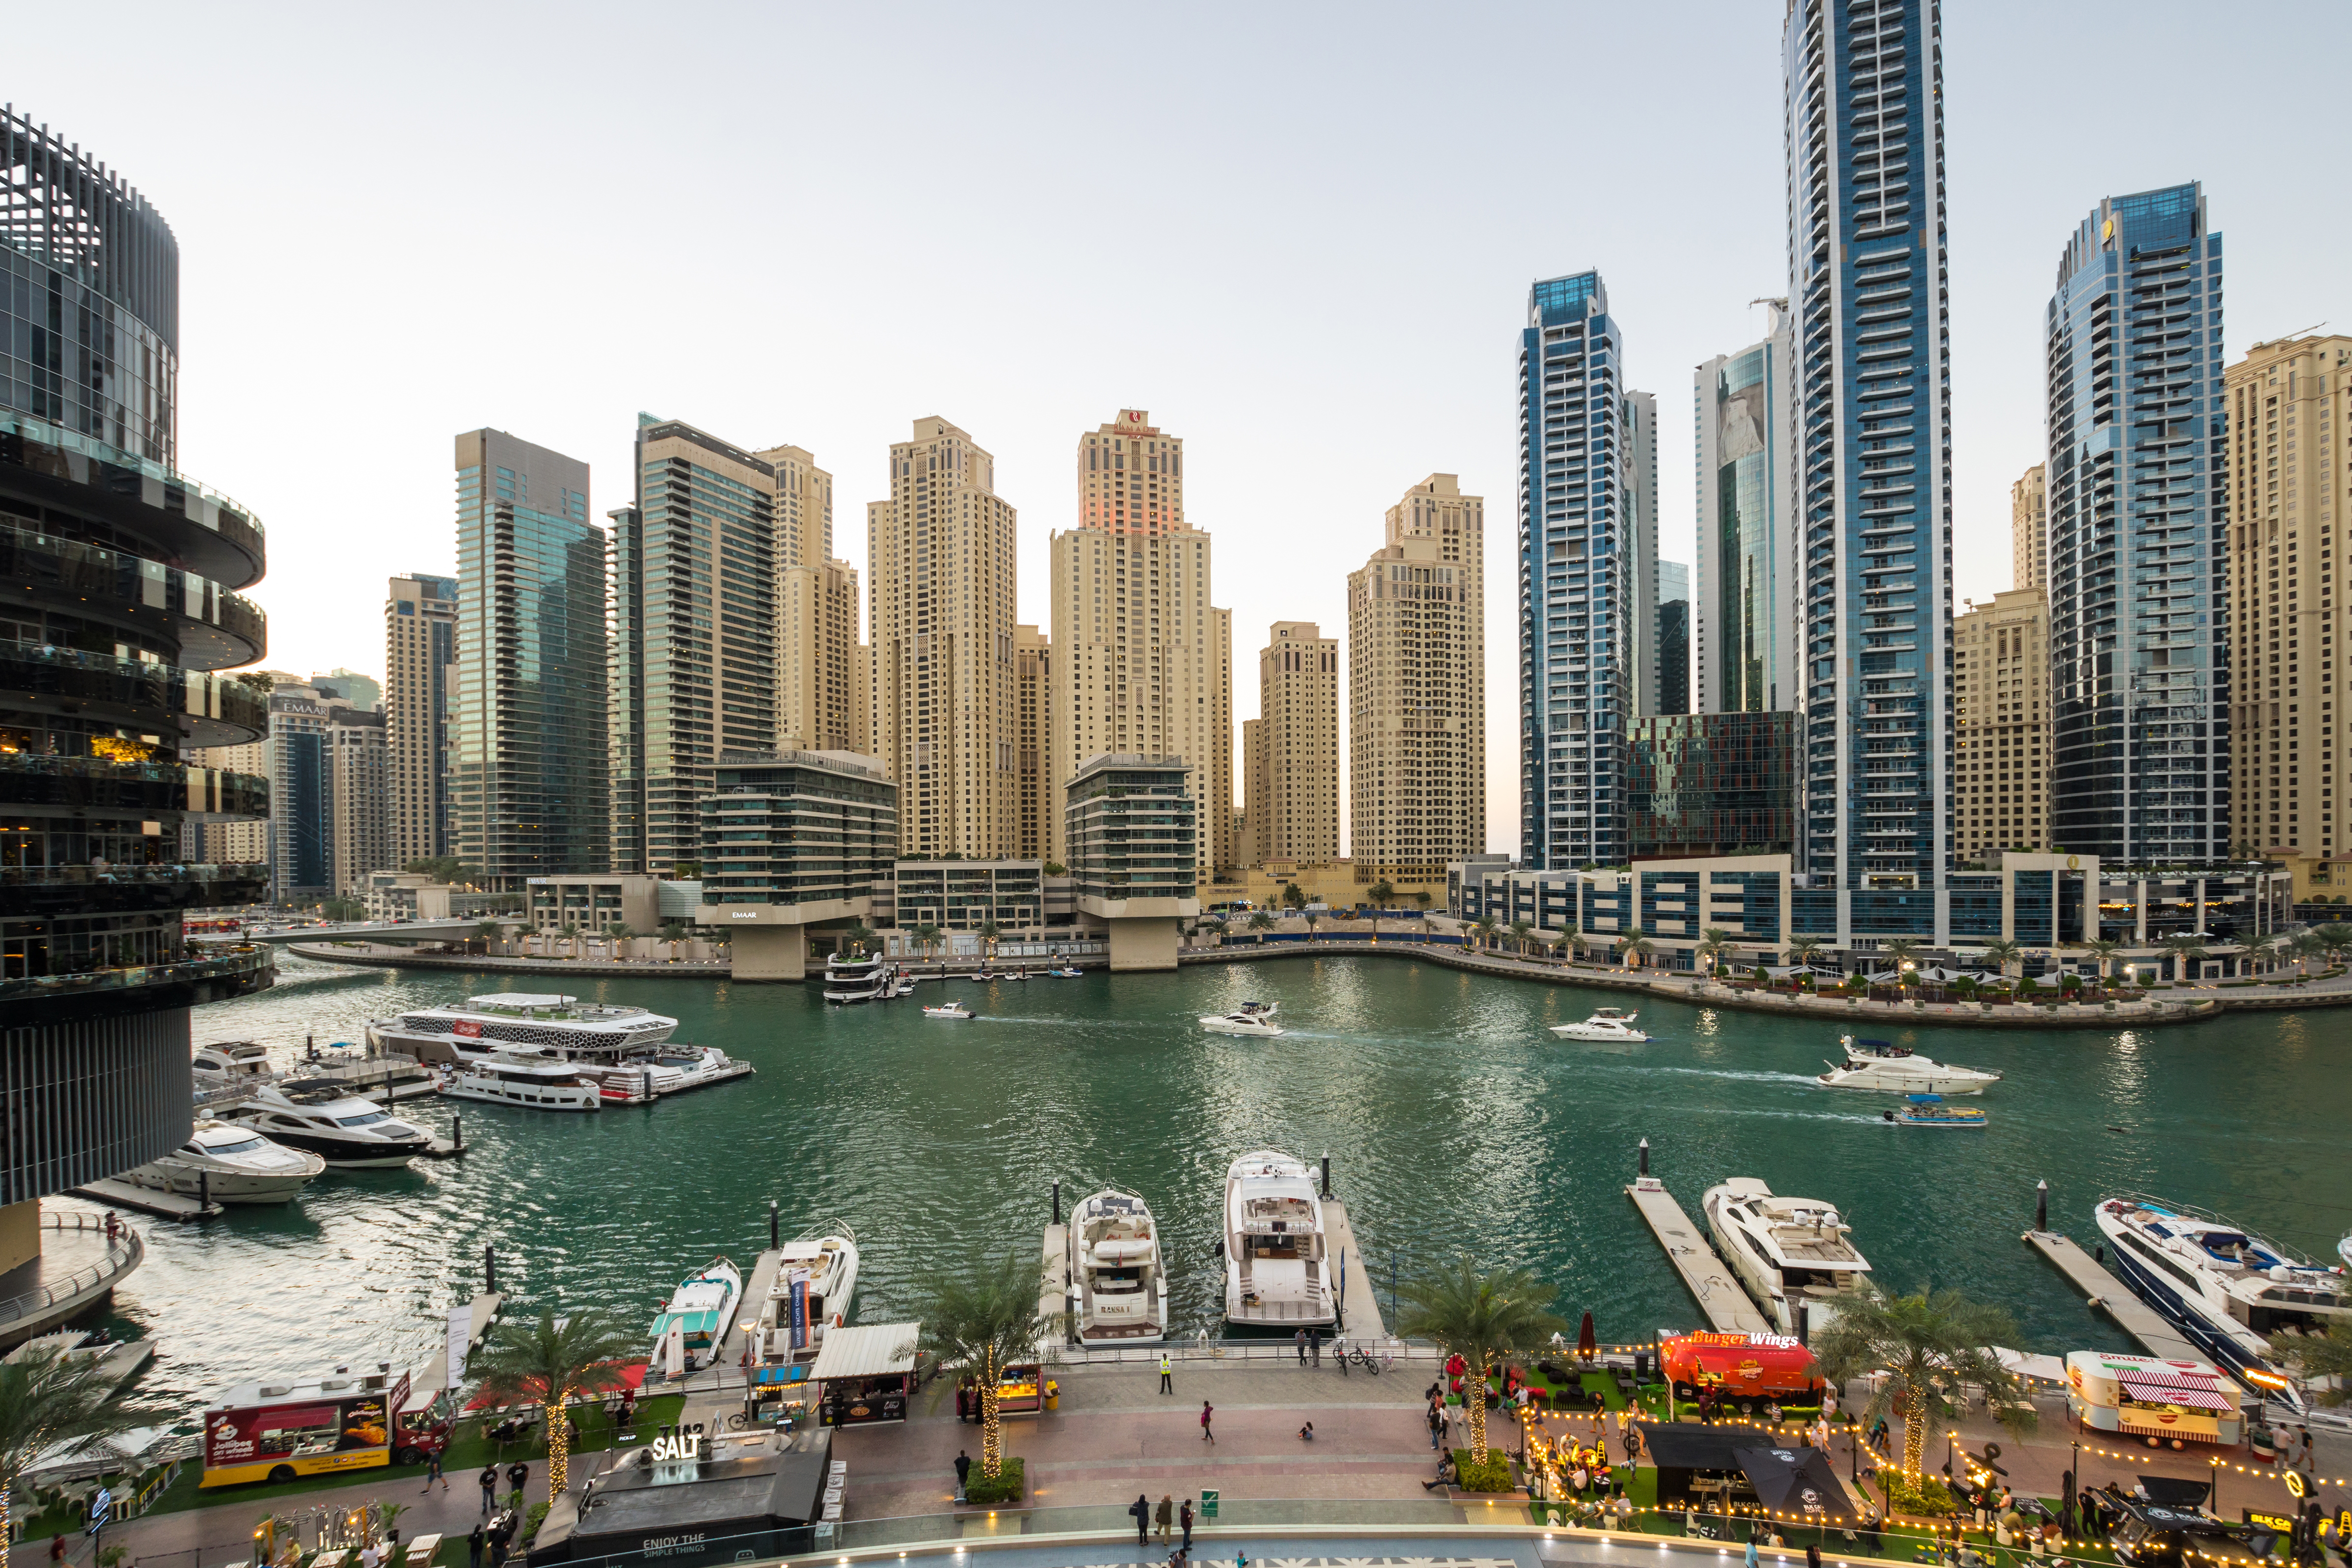 Dubai, a city where Russians and Belarusians can obtain UAE citizenship